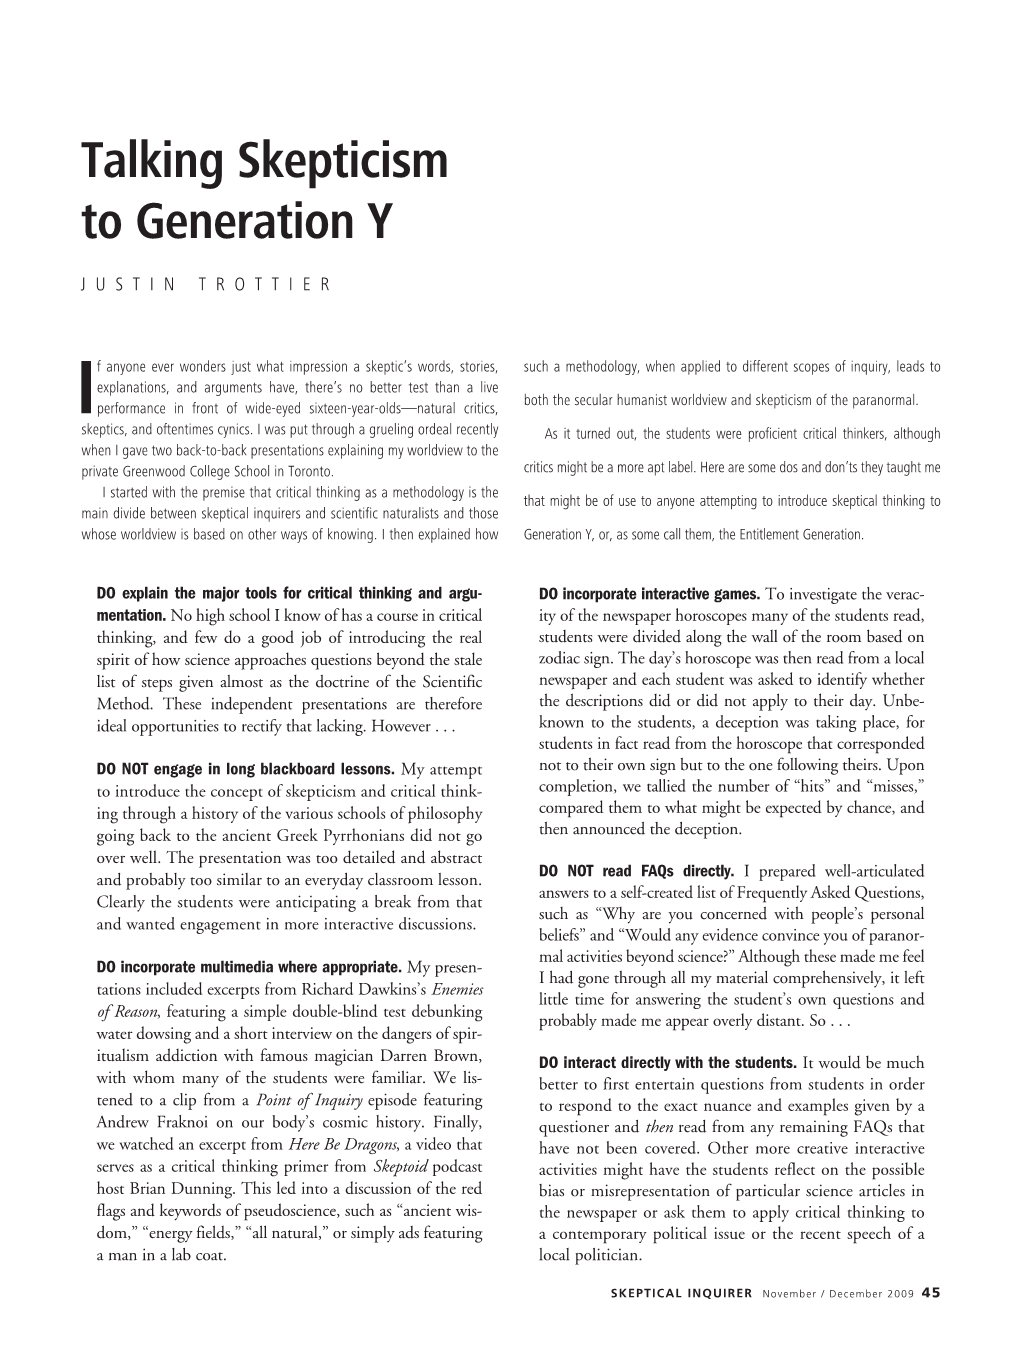 Talking Skepticism to Generation Y